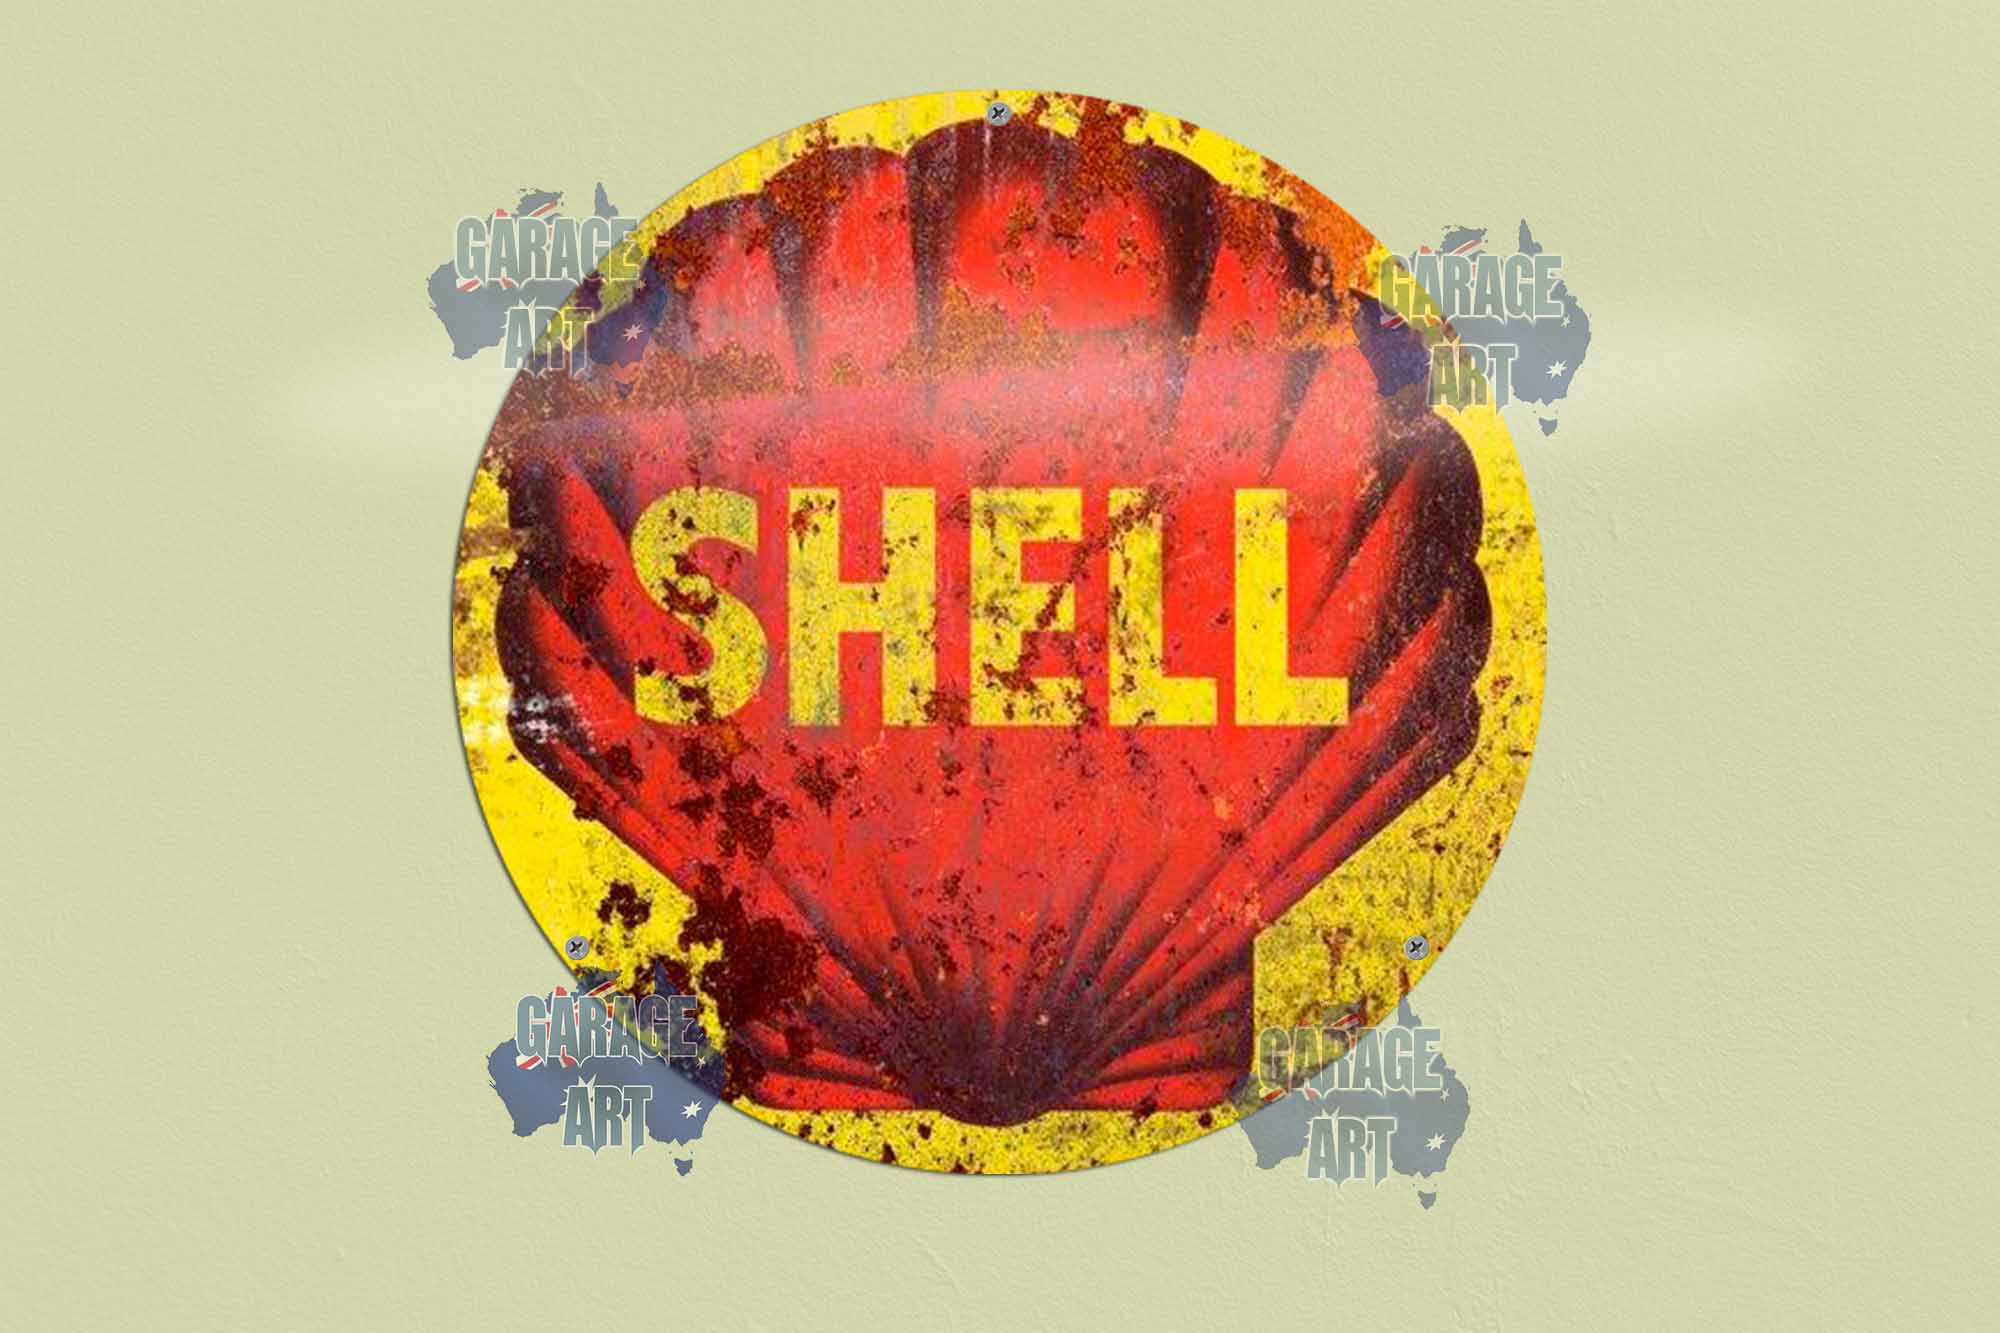 Shell heavy rust 3D 355mmDIa Tin Sign freeshipping - garageartaustralia